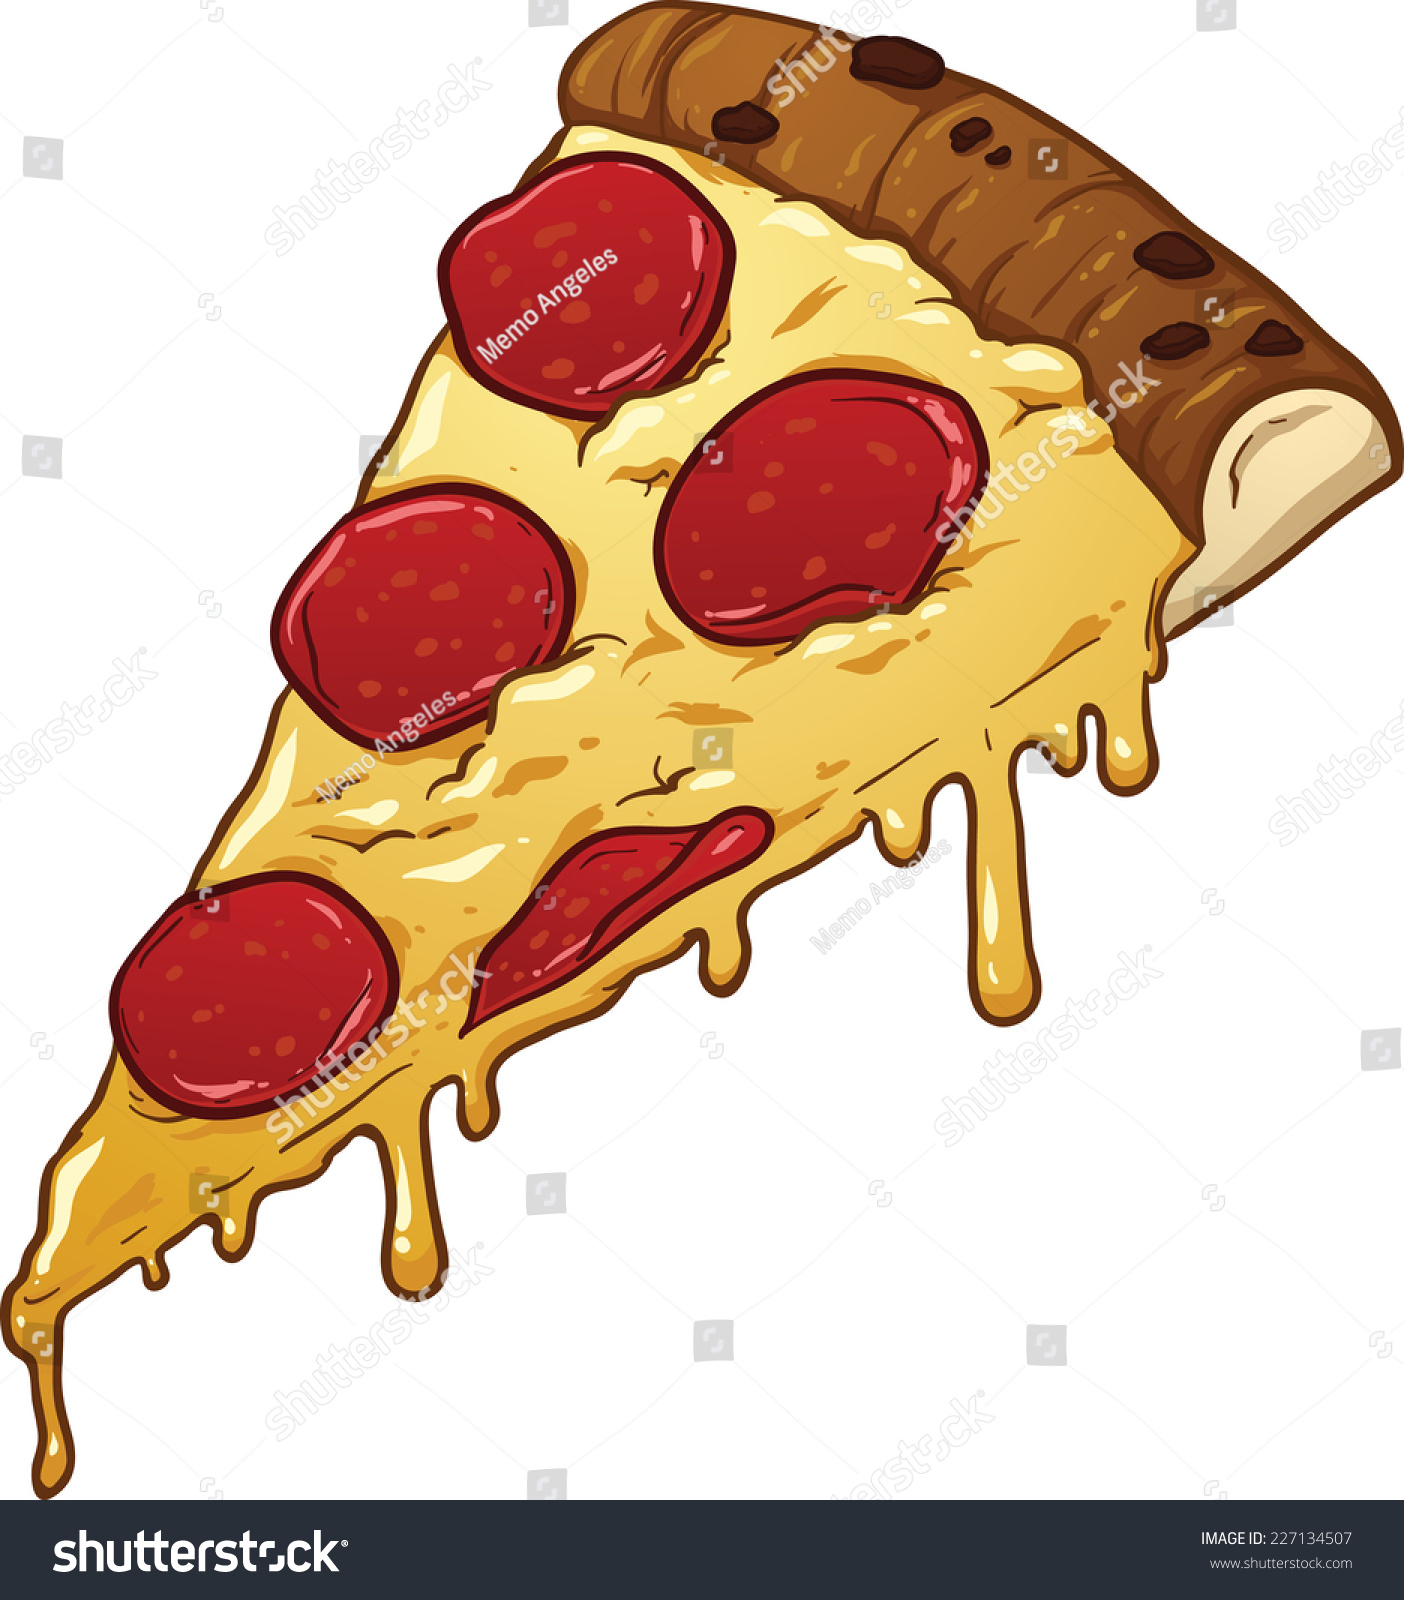 Image result for pizza slice